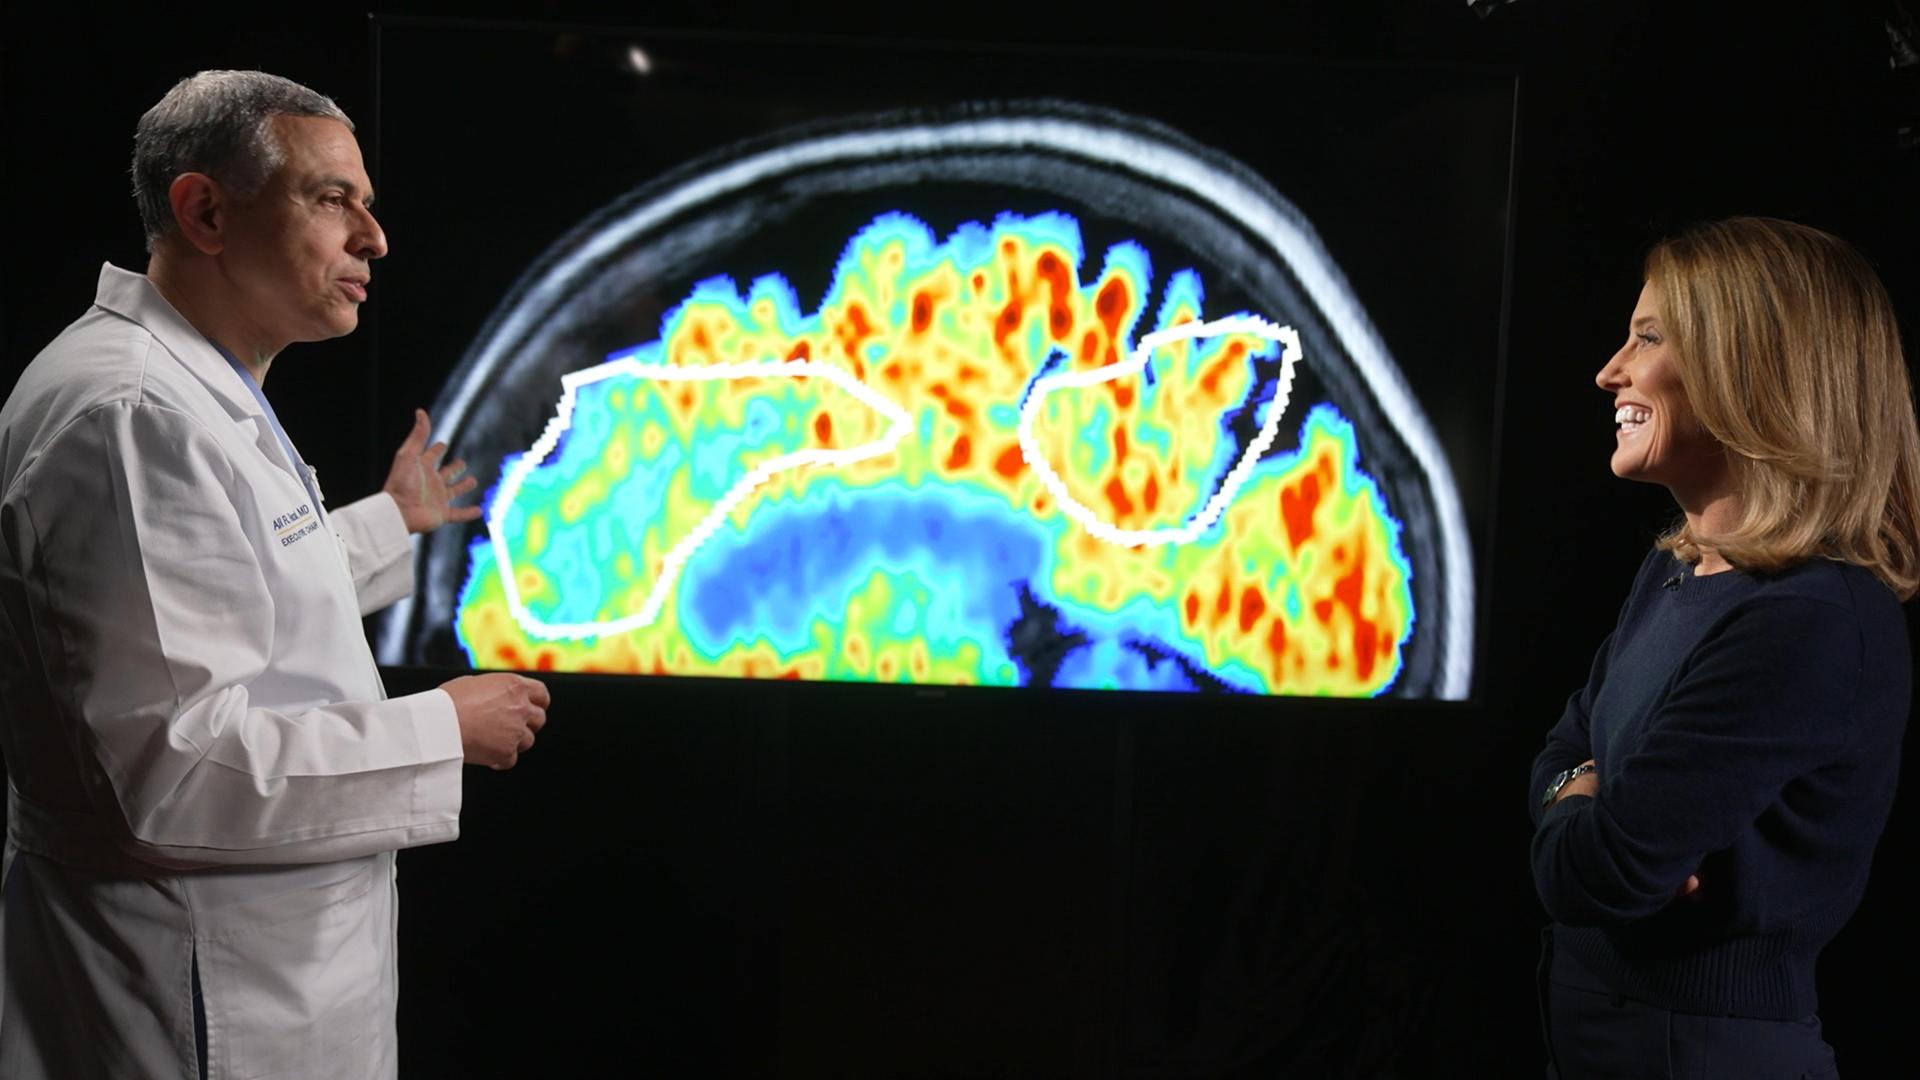 neurosurgeon works to treat alzheimer's, addiction with ultrasound technology